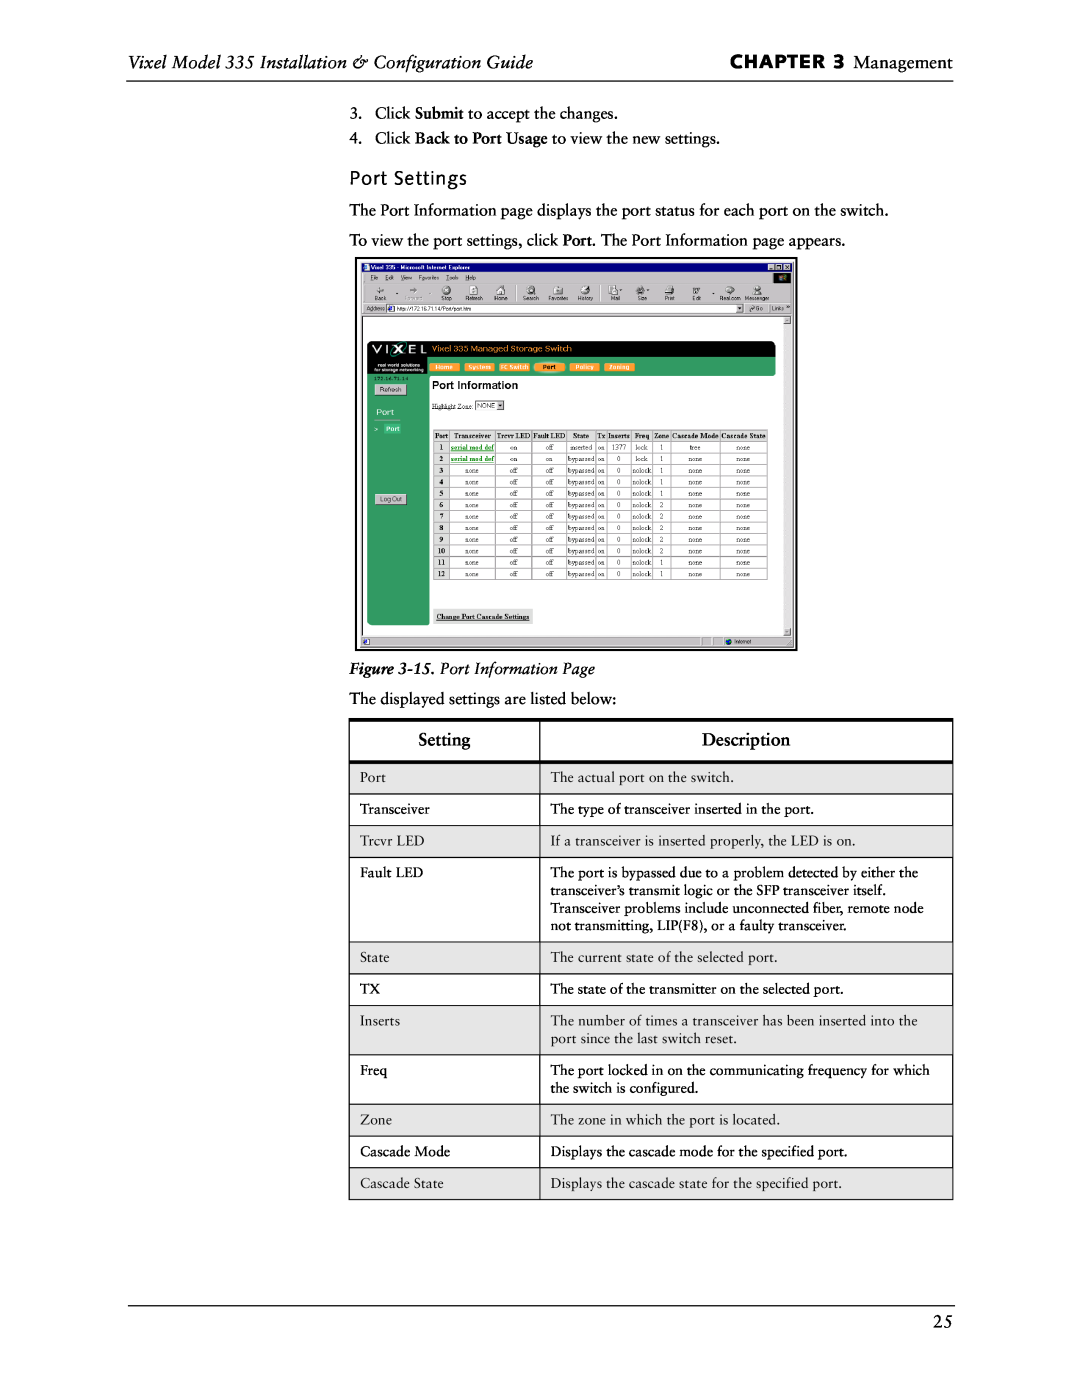 Vixel manual Management, Port Settings, Vixel Model 335 Installation & Configuration Guide, Description 